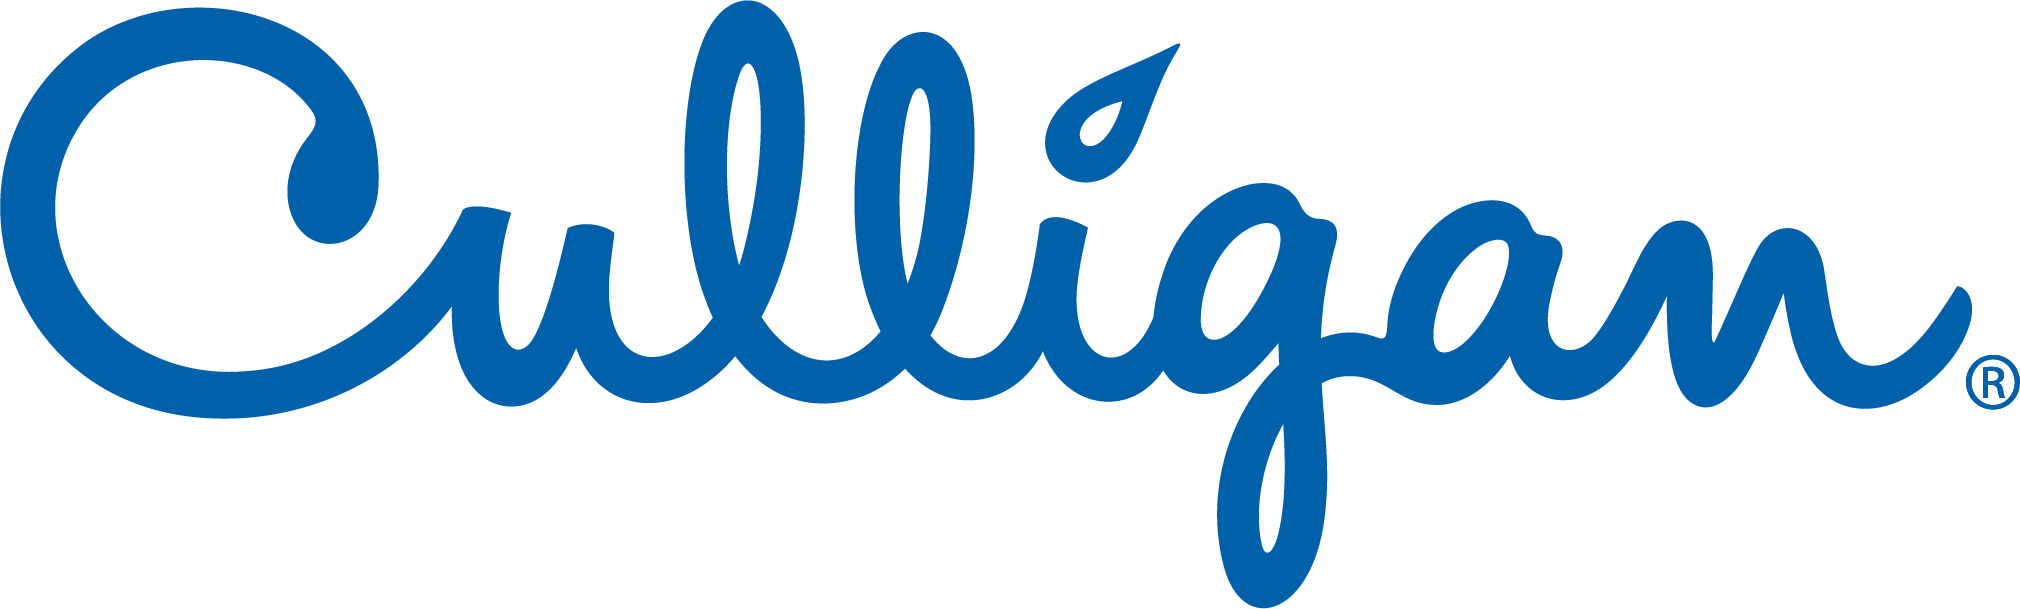 Culligan_Logo_Blue.png